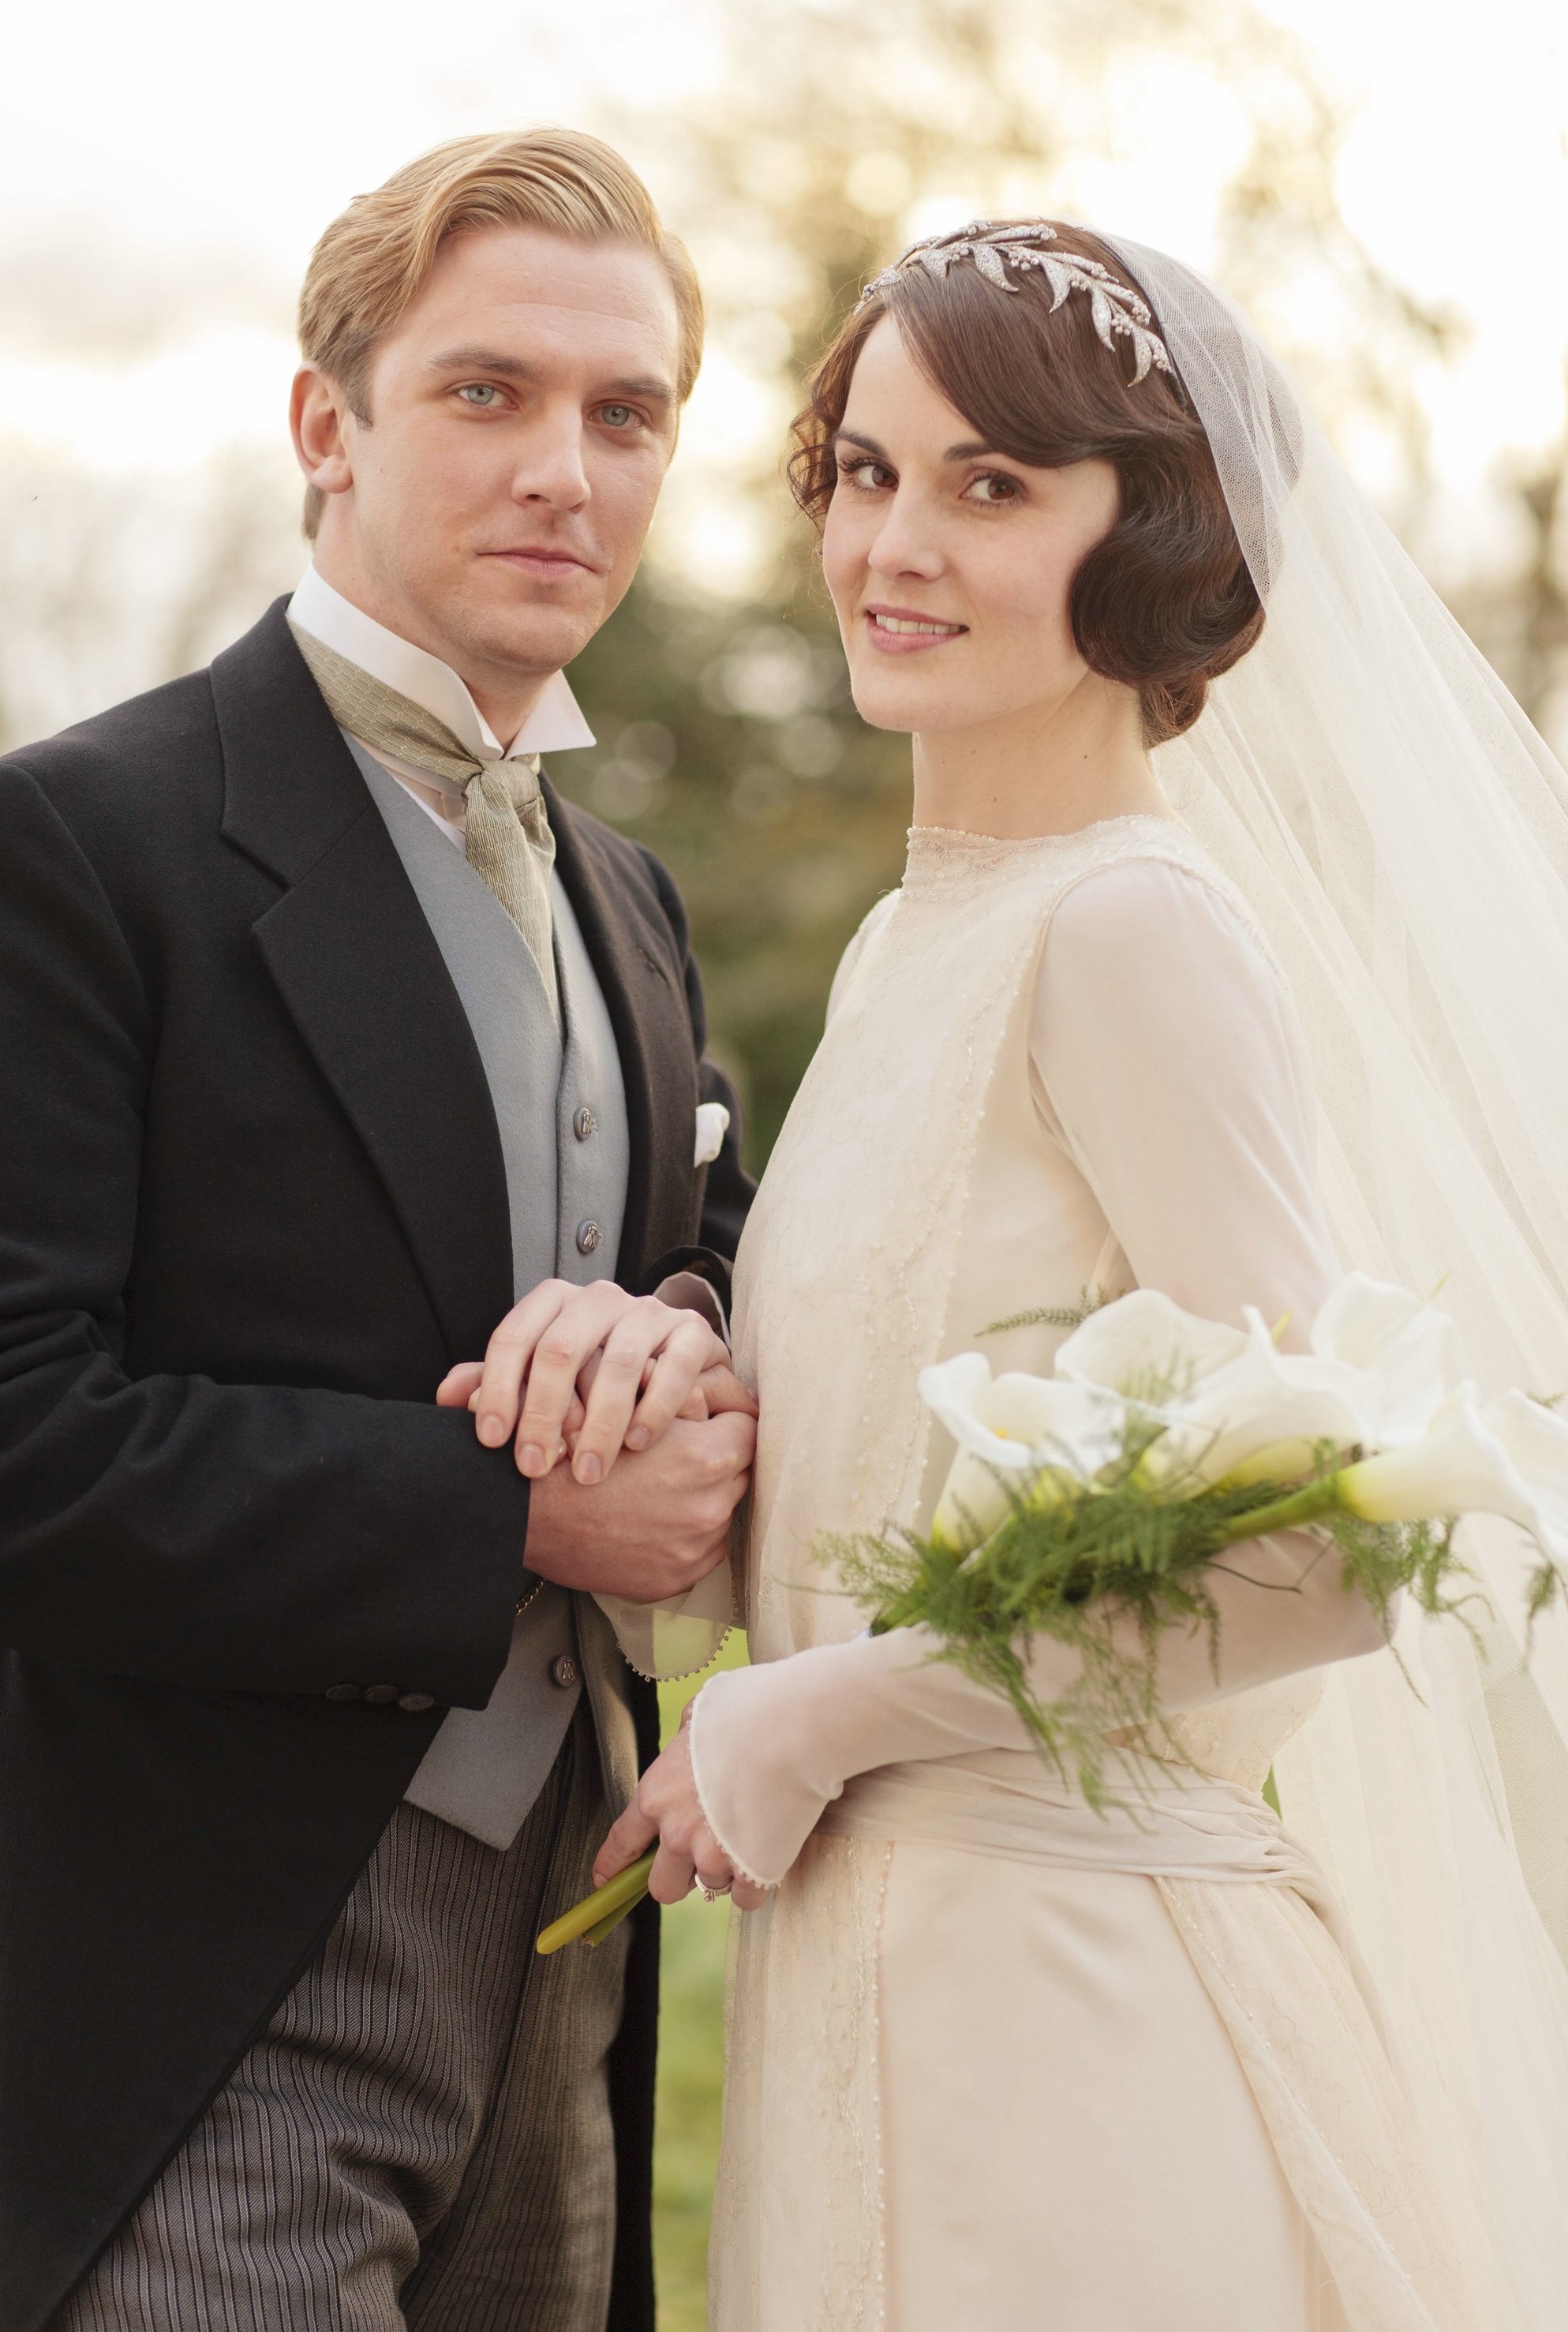 Downton Abbey Series 3 - Mary & Matthew Crawley's Wedding